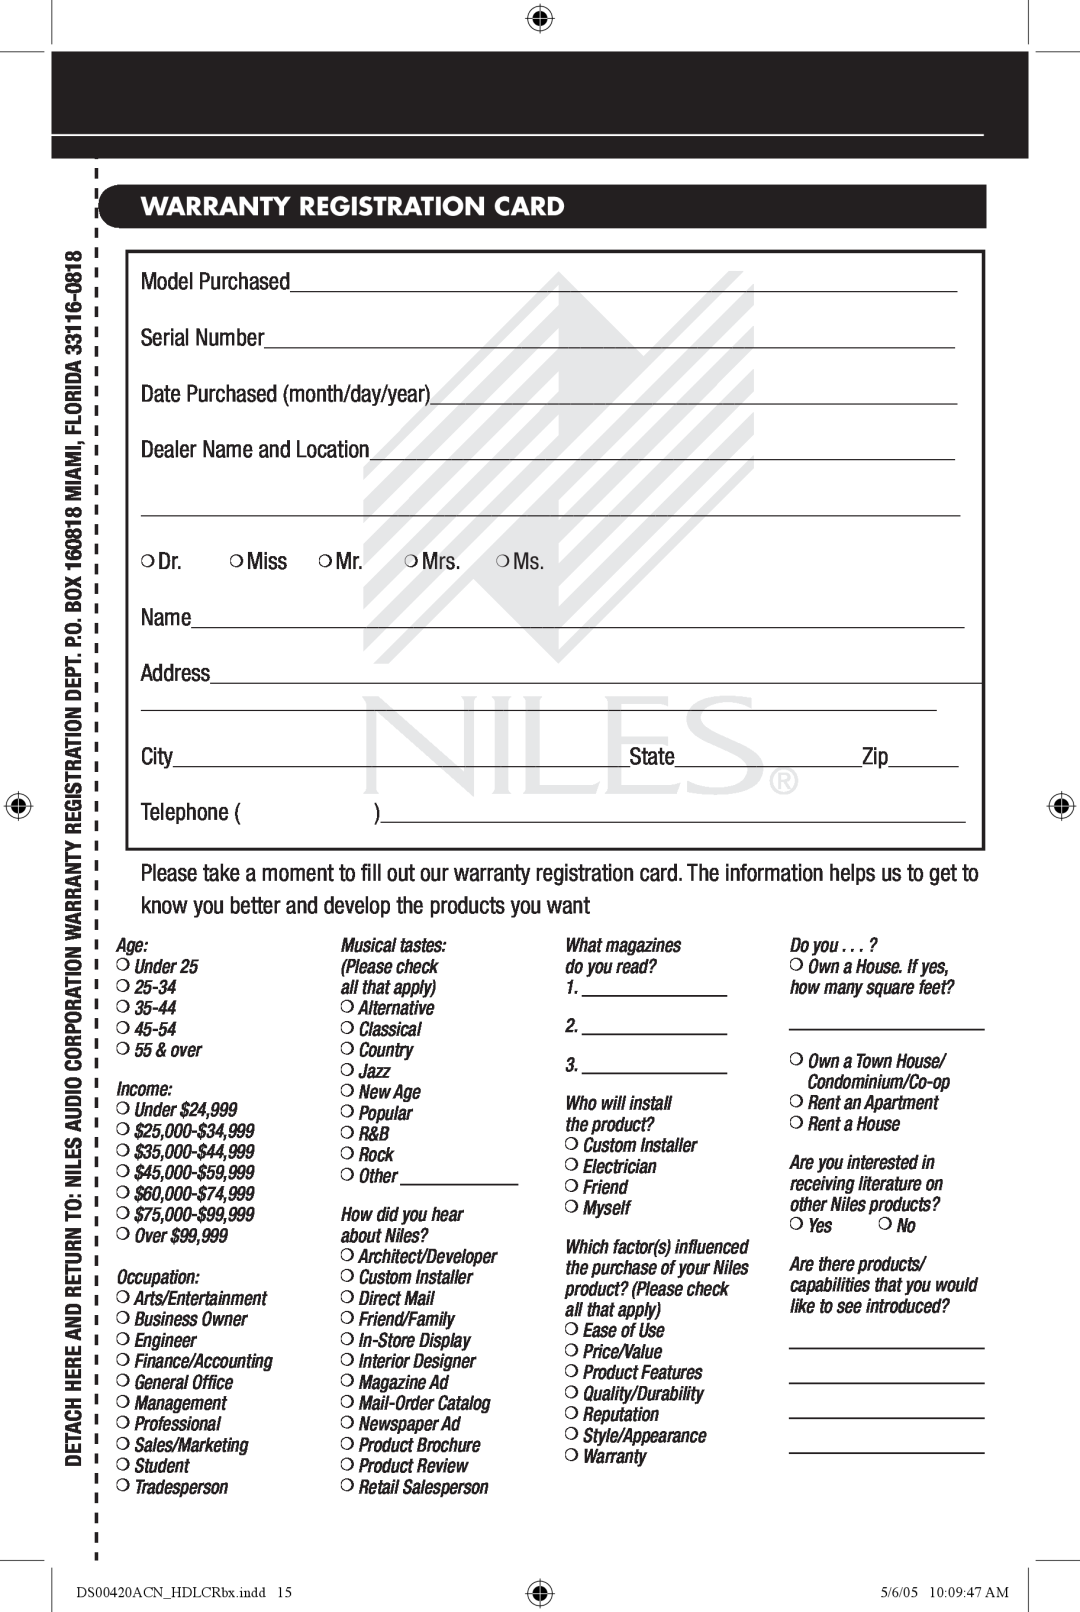 Niles Audio DS00420ACN manual Warranty Registration Card 